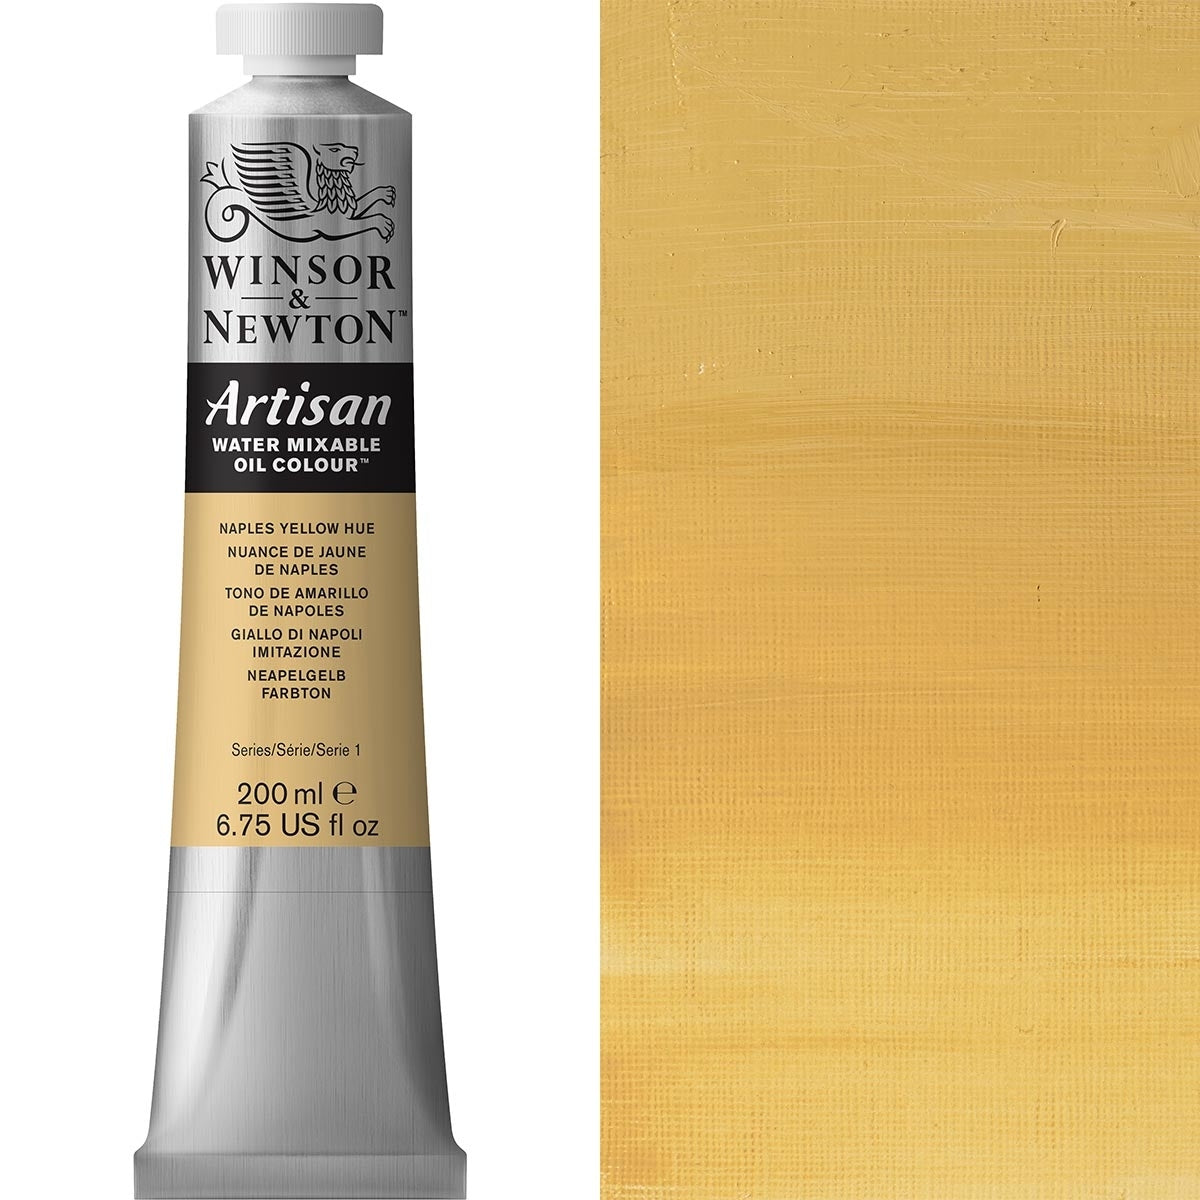 Winsor and Newton - Artisan Oil Colour Watermixable - 200ml - Naples Yellow